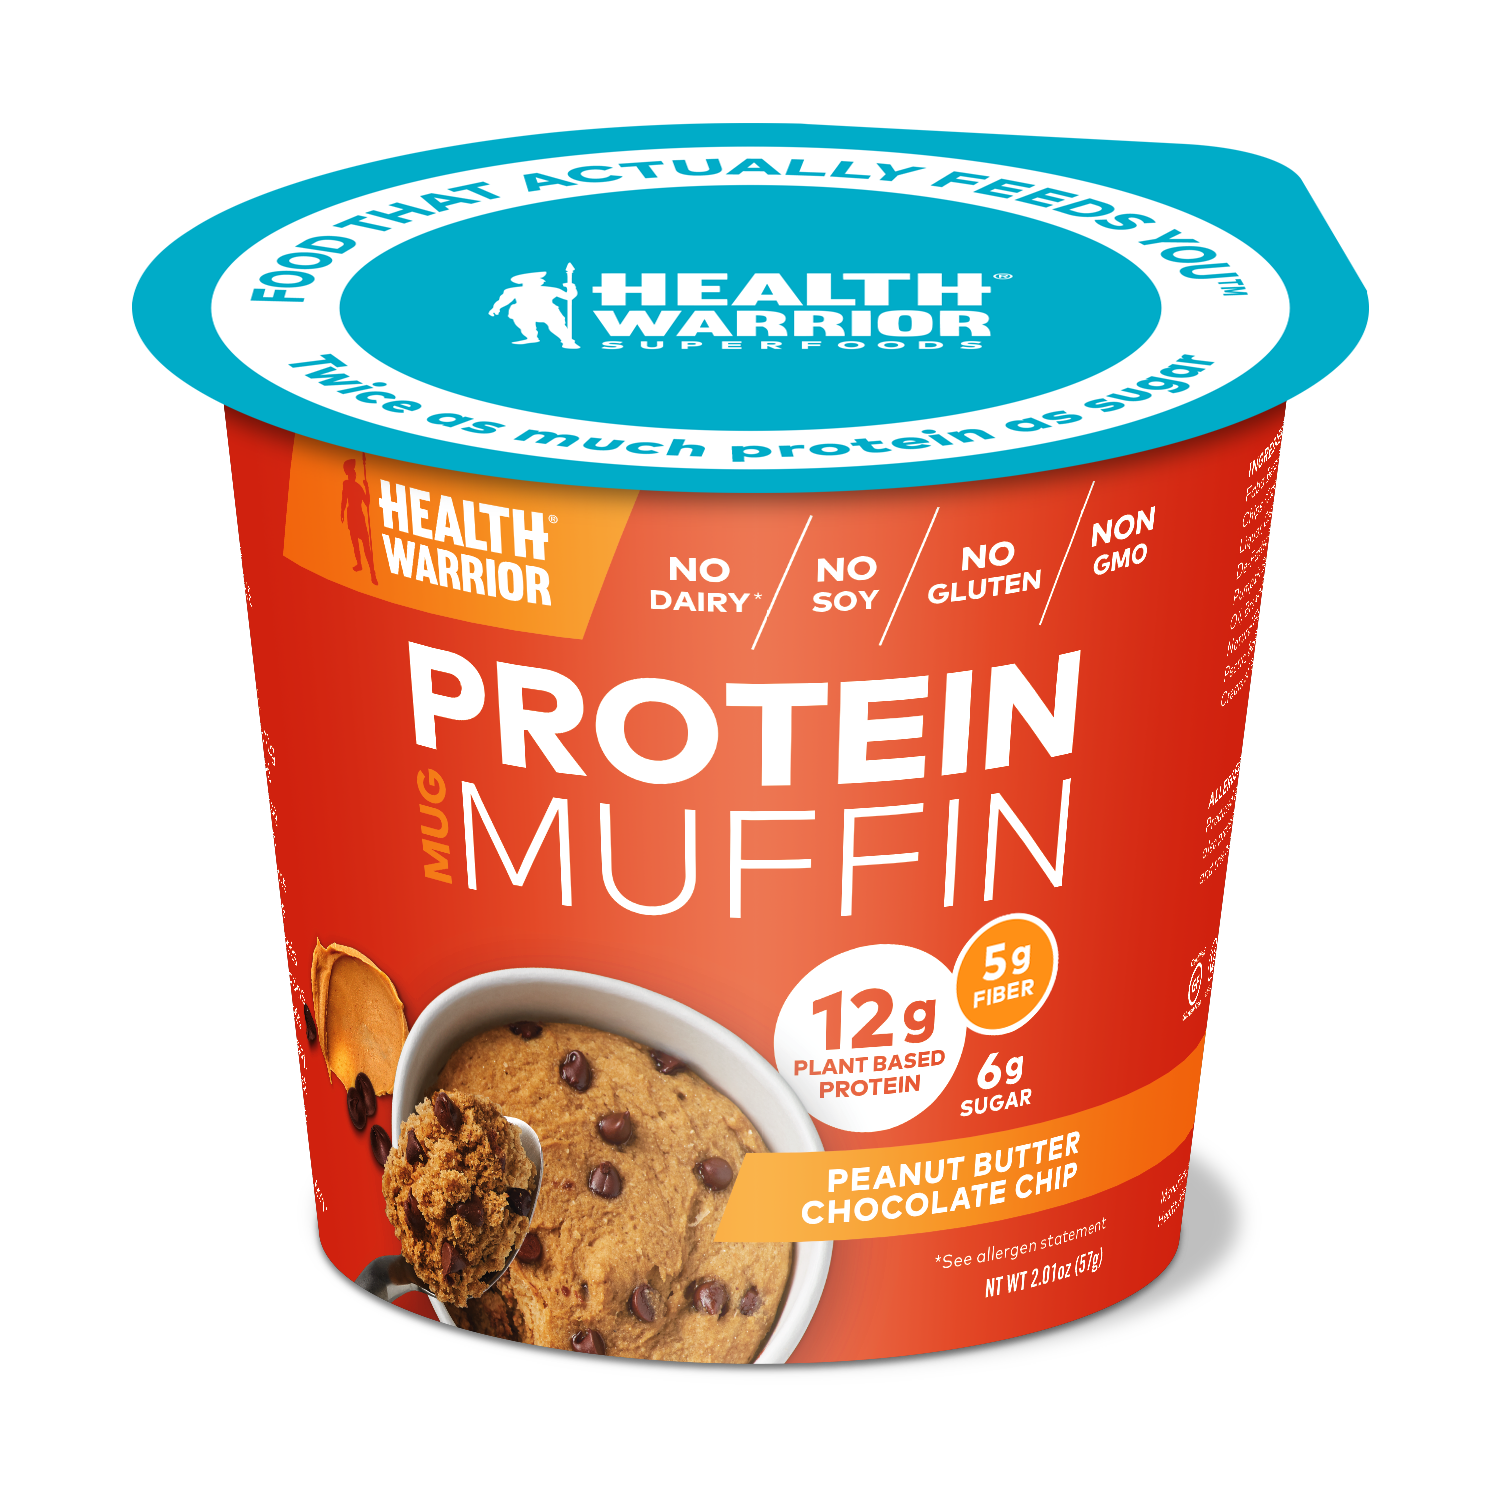 Health Warrior launches high-protein mug muffin as healthier breakfast option